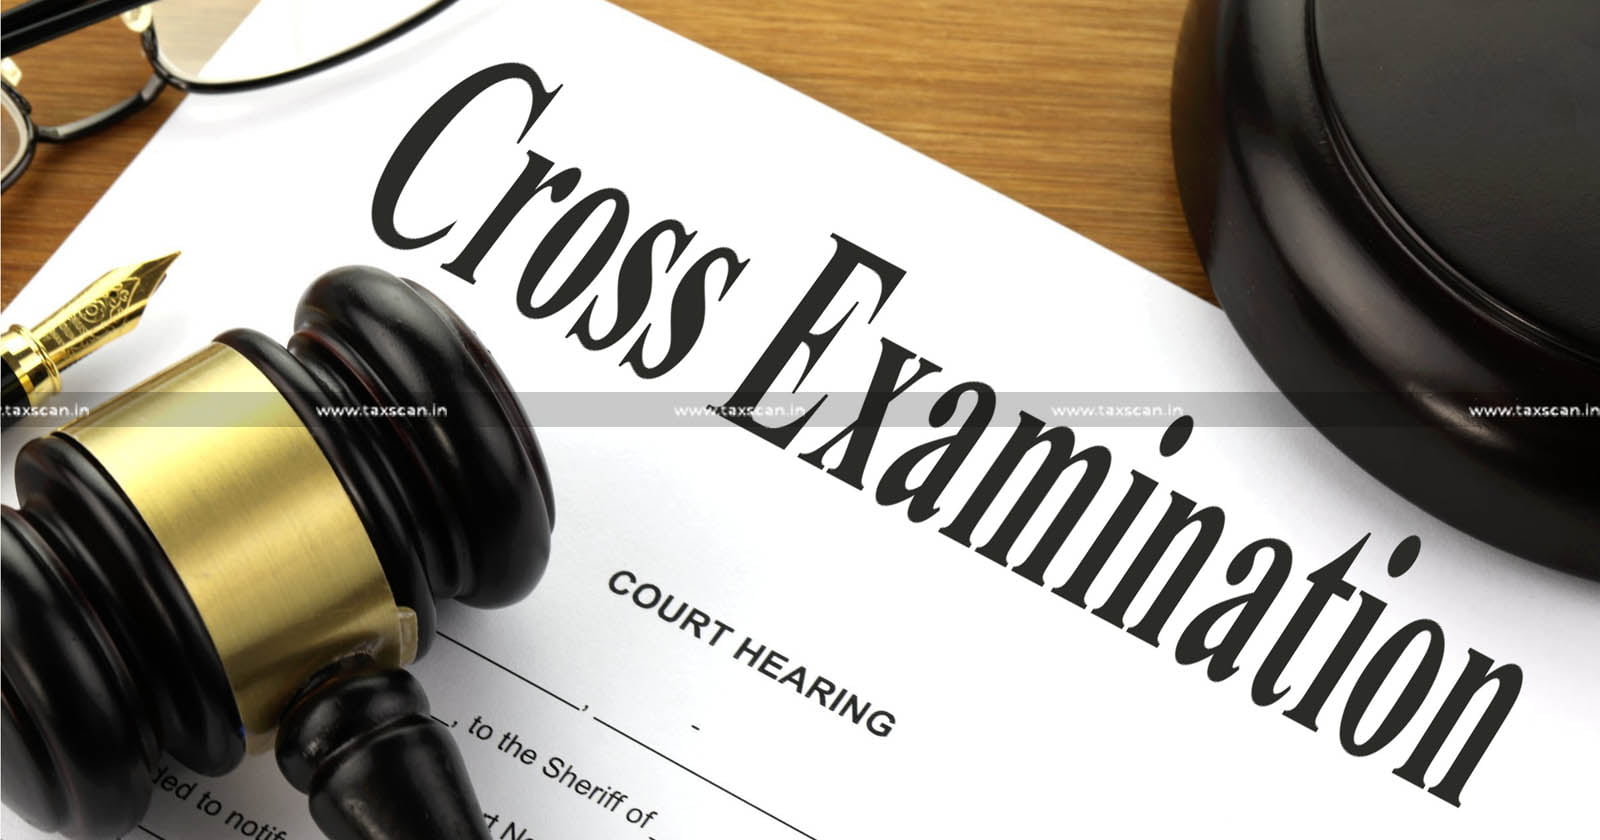 Sustain - Cross Examination - Assessee - Addition - Third Party Statement - ITAT - taxscan